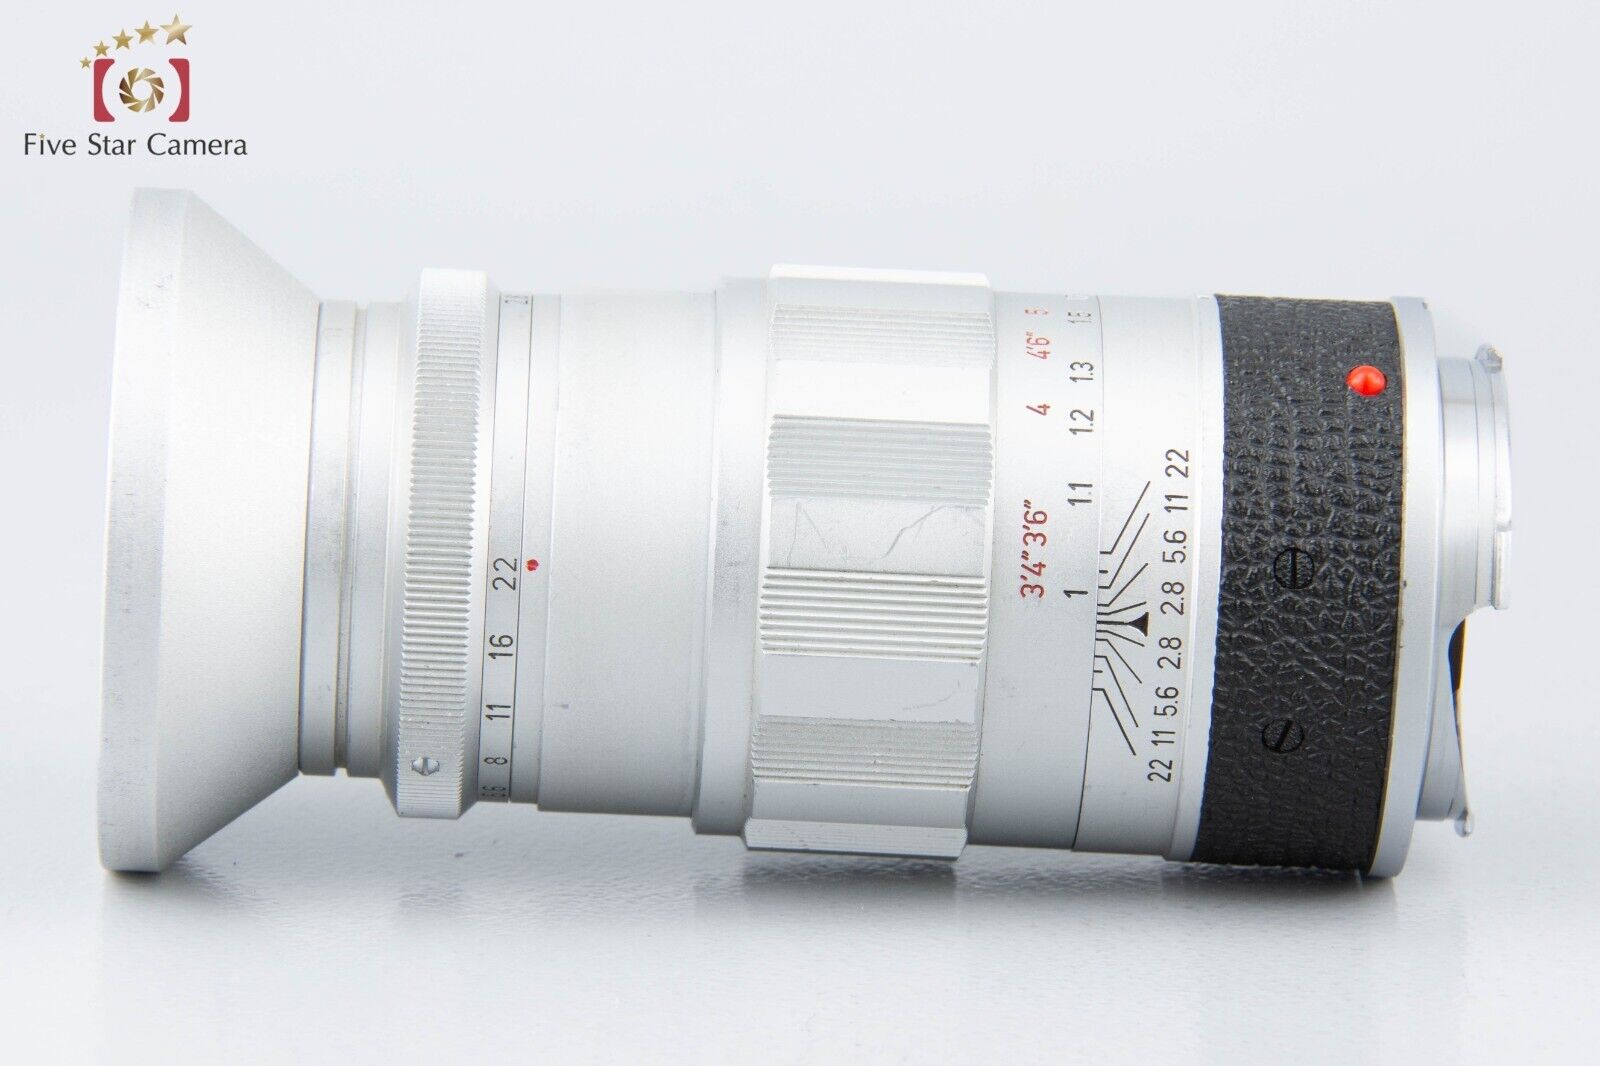 "As-Is" Leica ELMARIT 90mm f/2.8 Leica M Mount Lens